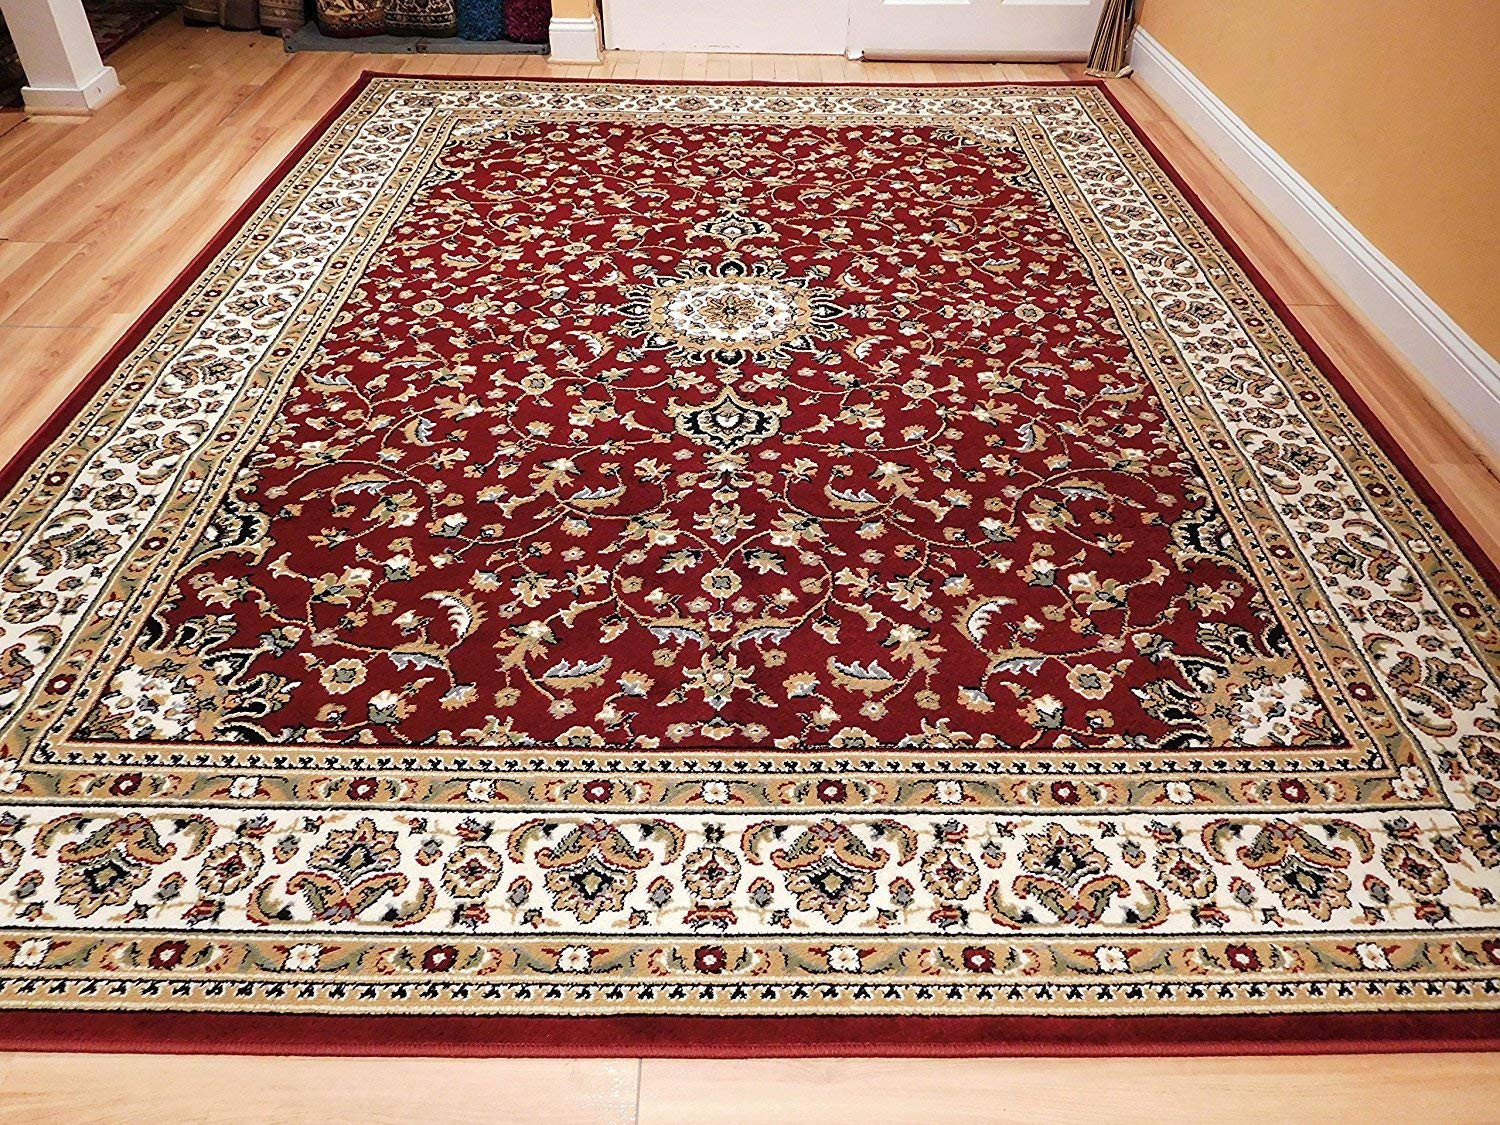 oriental area rugs amazon.com: large 5x8 red cream beige black isfahan area rug oriental  carpet FGSGEJP